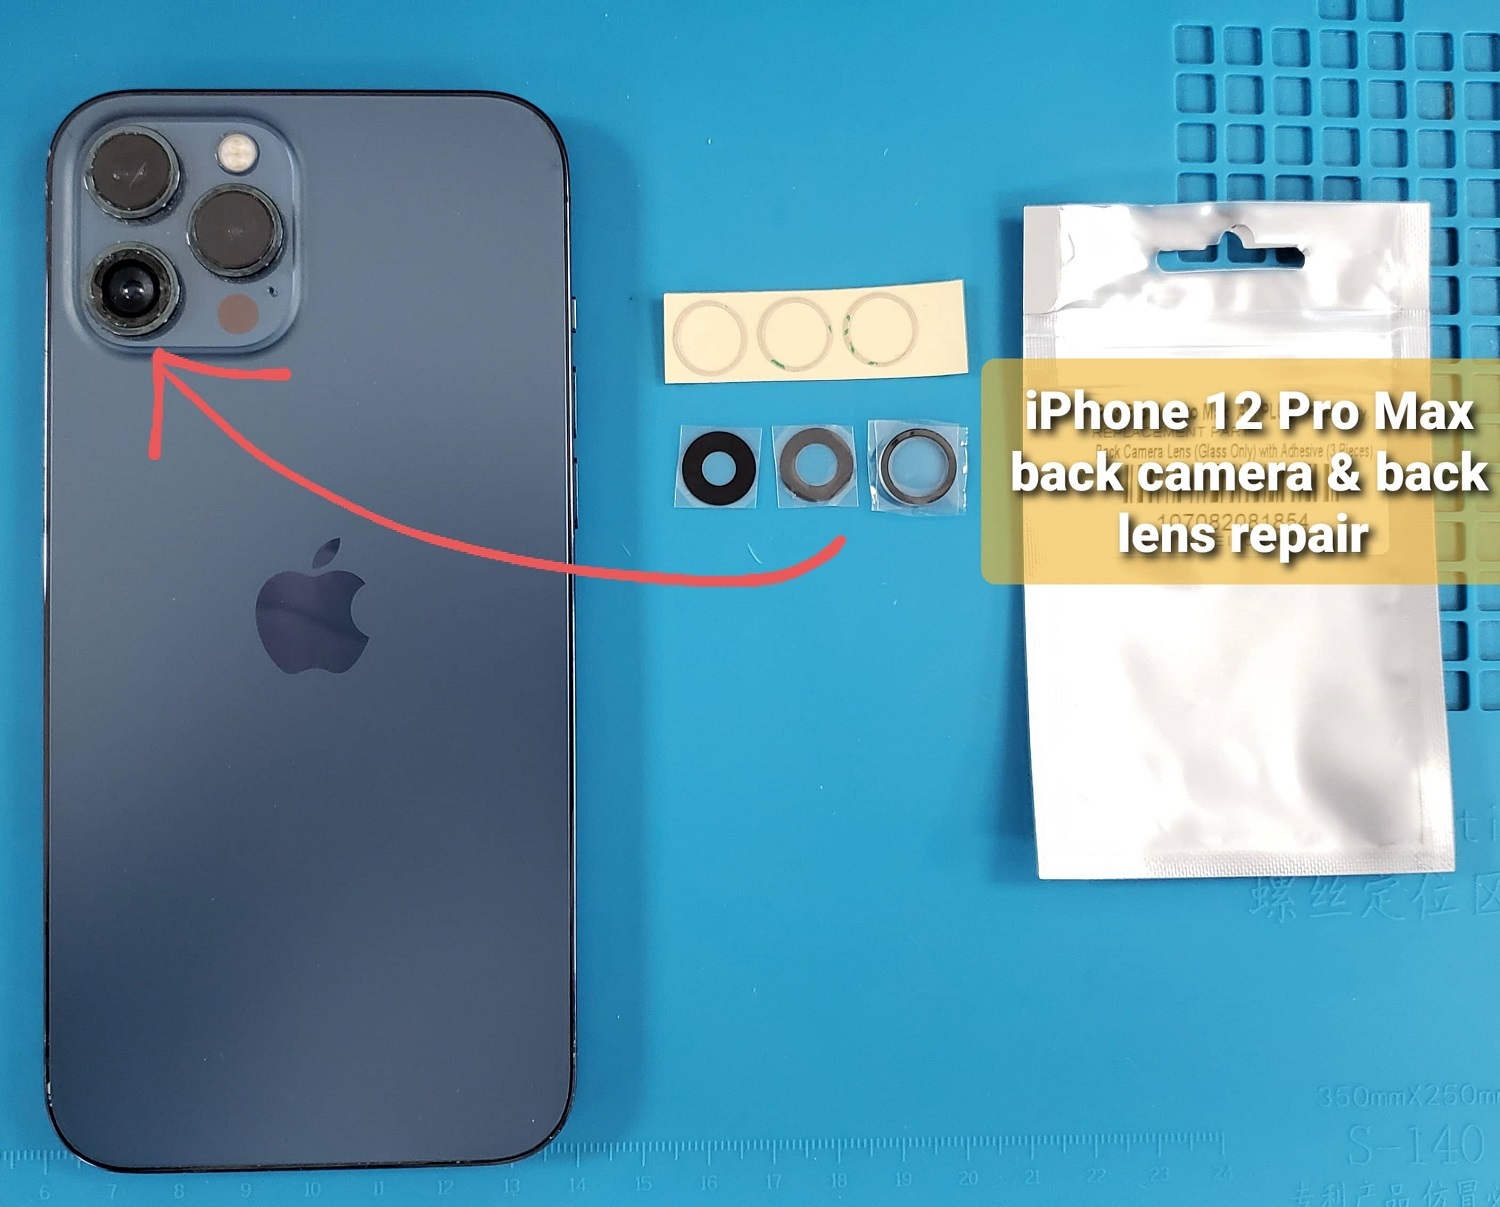 I phone 12 pro max, Back Camera & Back lens repair (1)